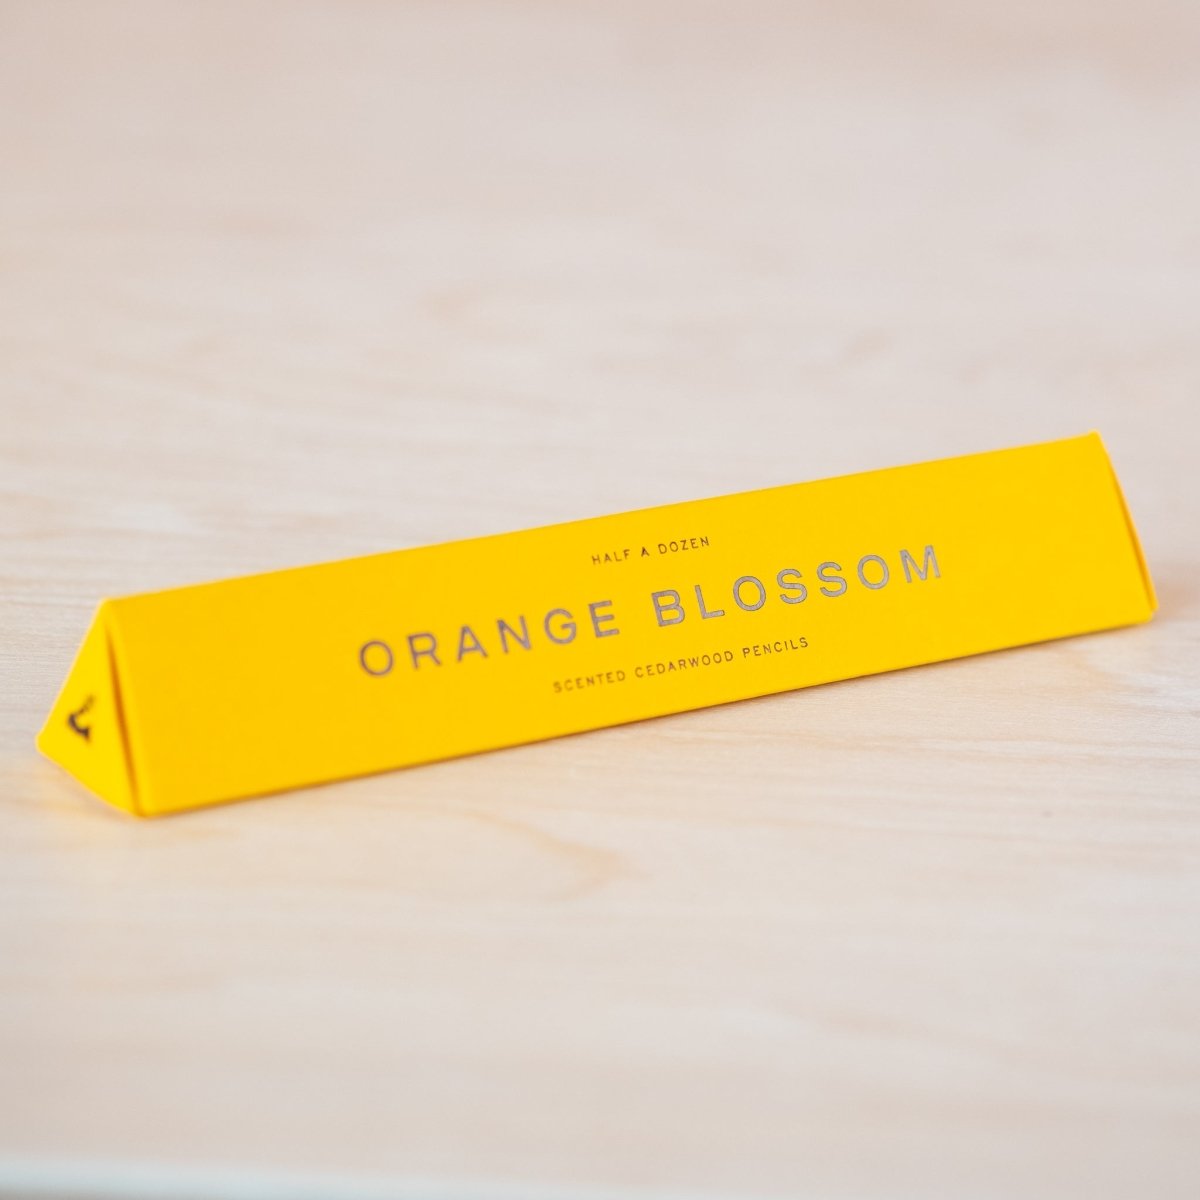 A box of Orange blossom scented pencils